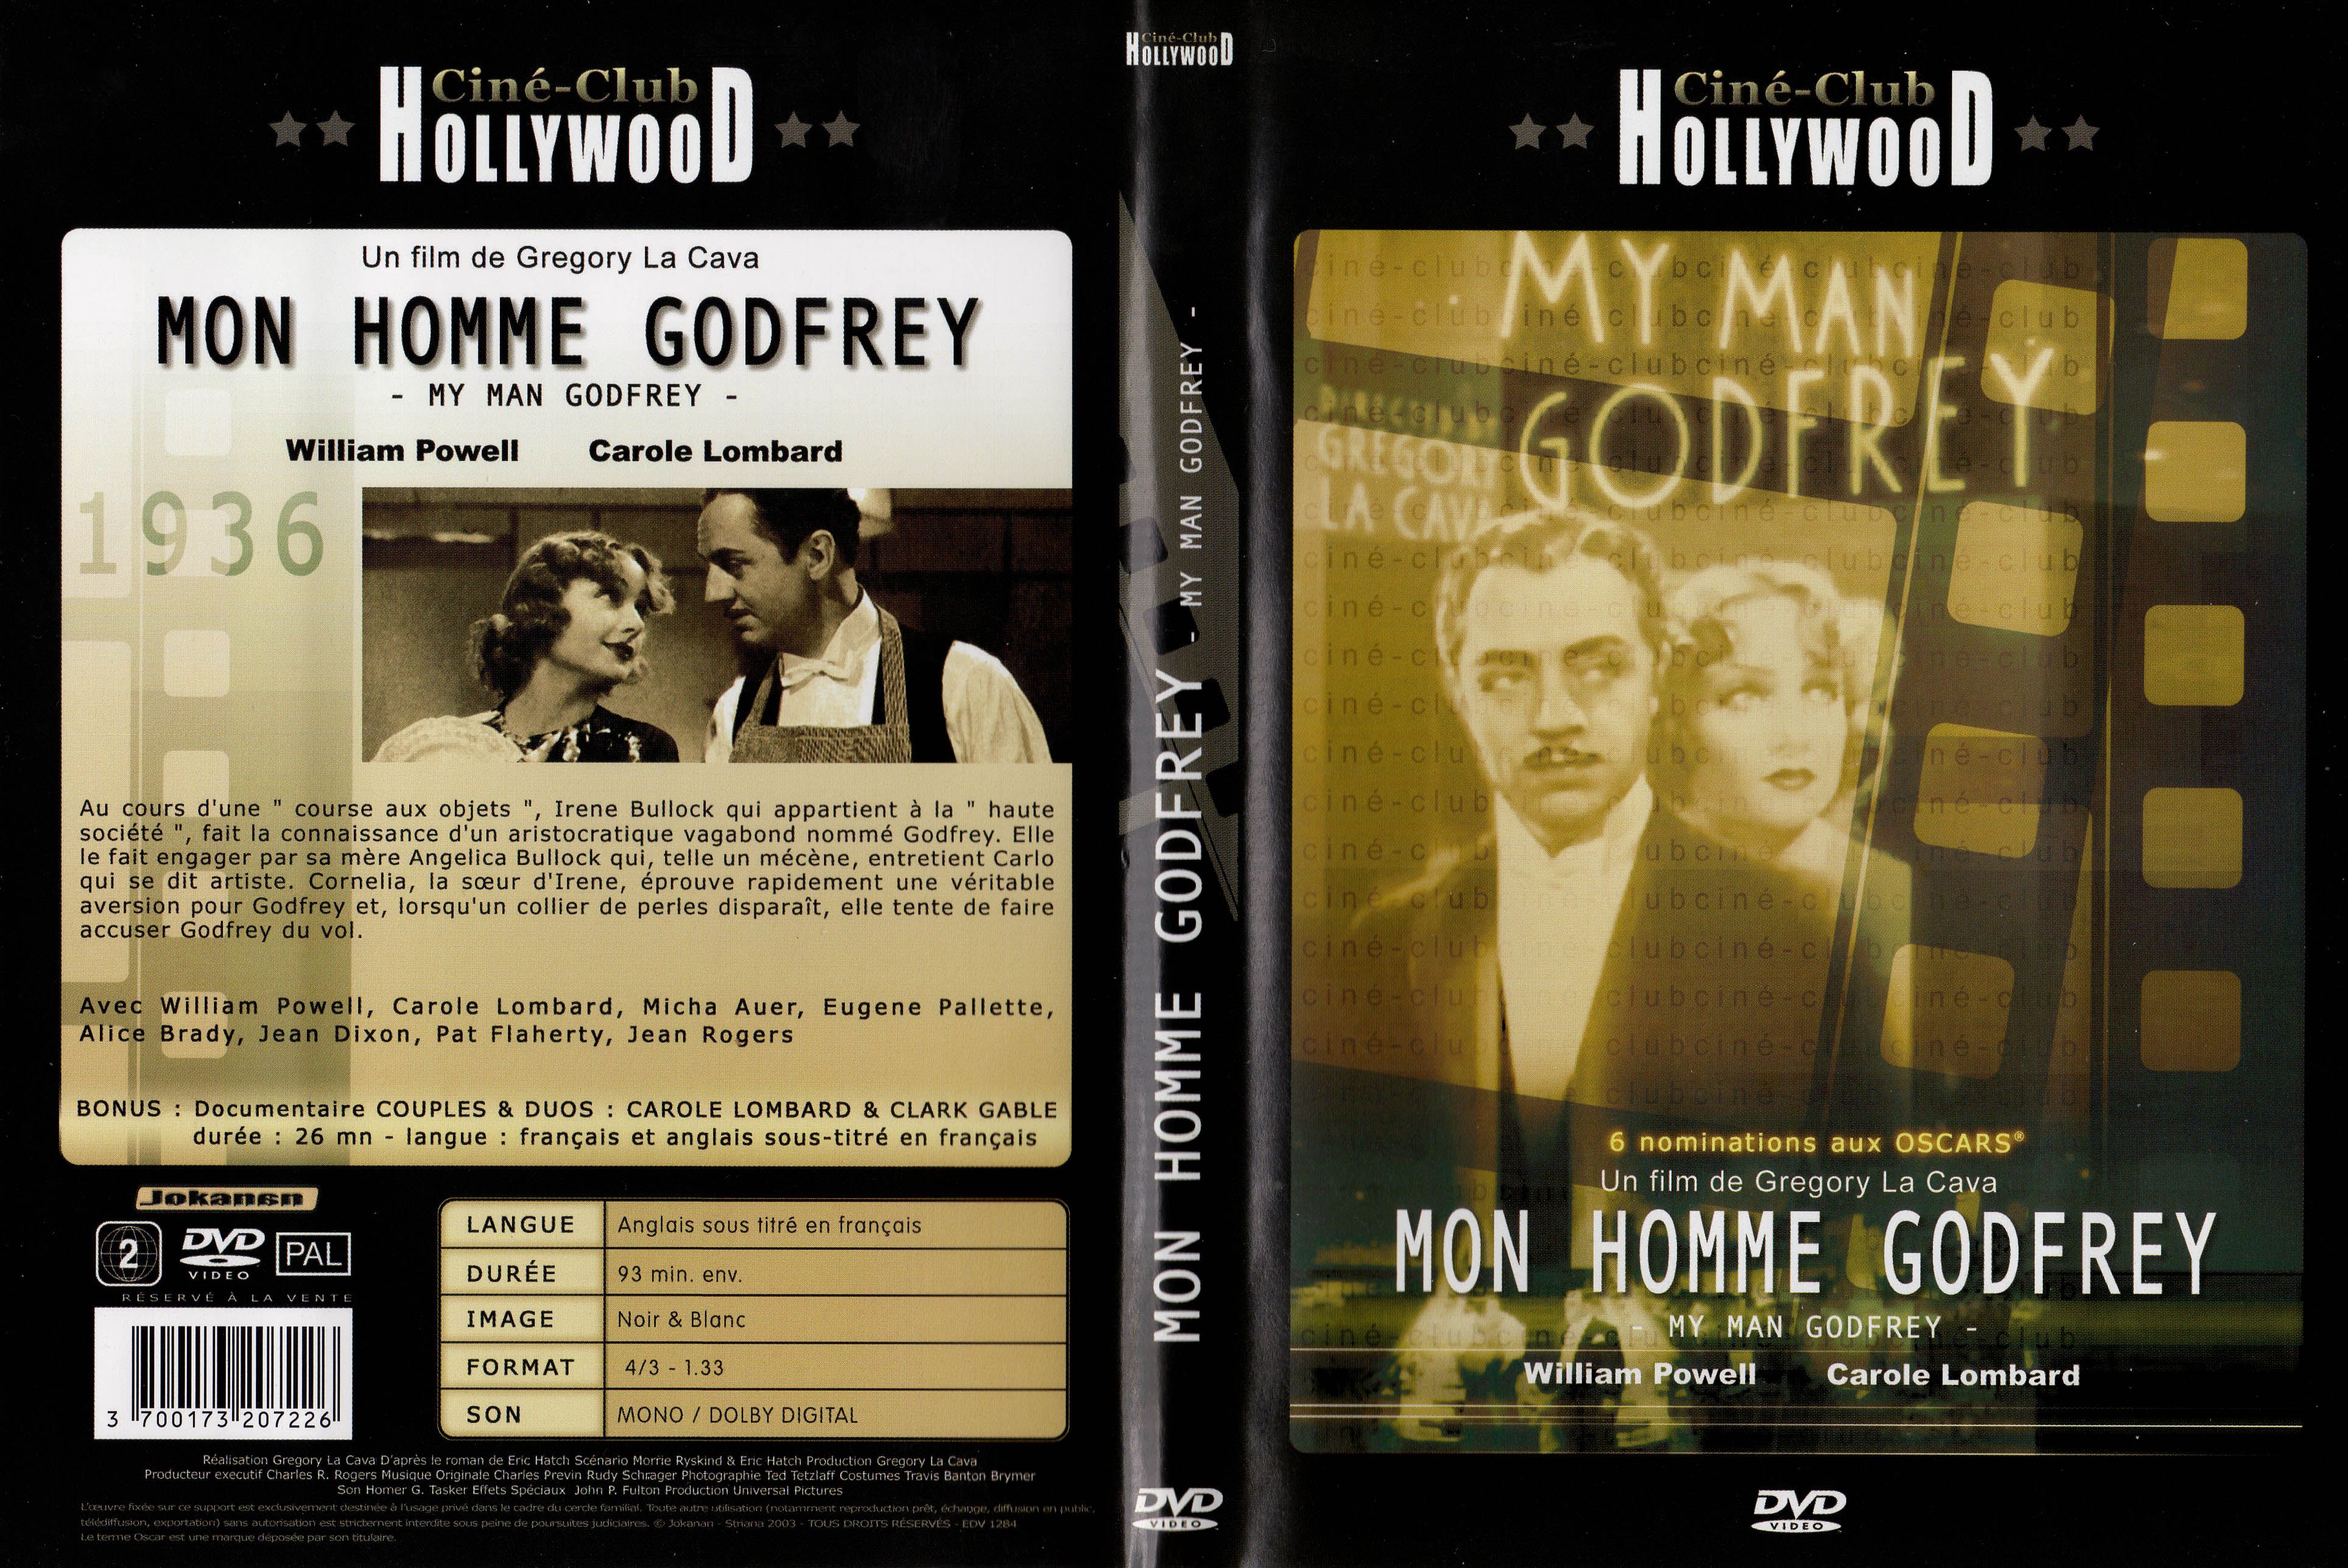 Jaquette DVD Mon homme Godfrey